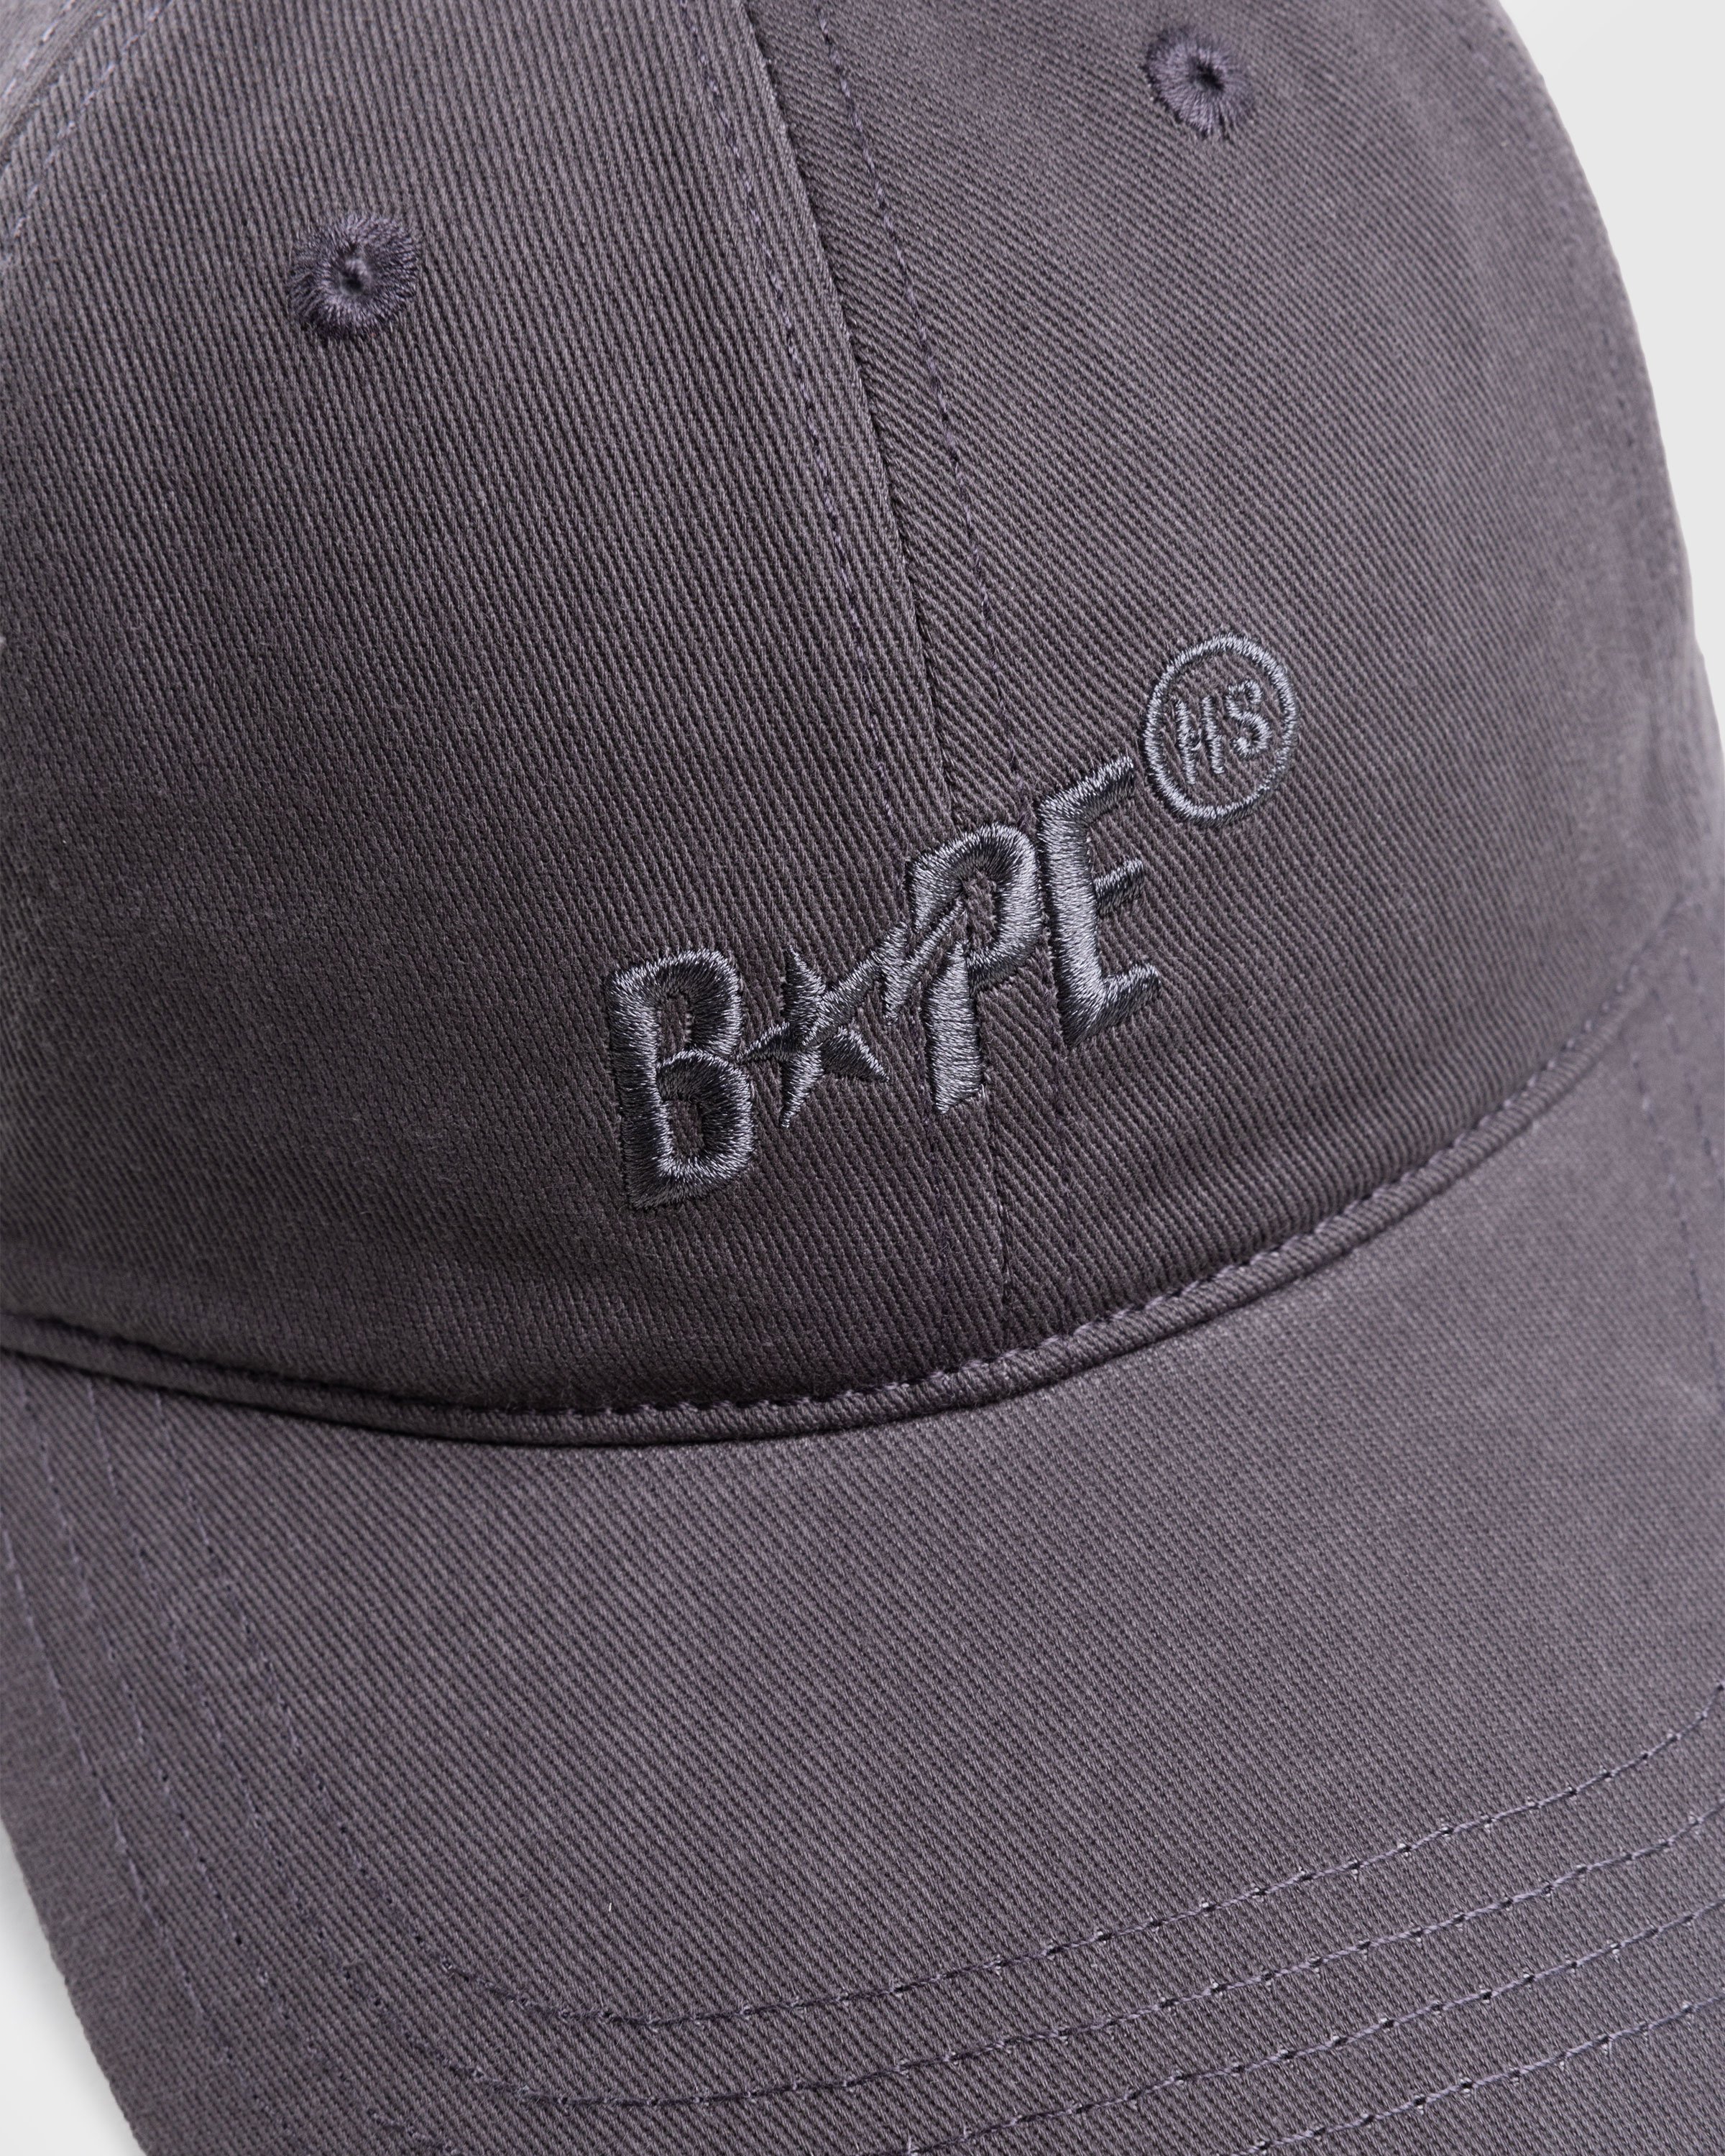 BAPE x Highsnobiety - Logo Cap Charcoal - Accessories - Grey - Image 5